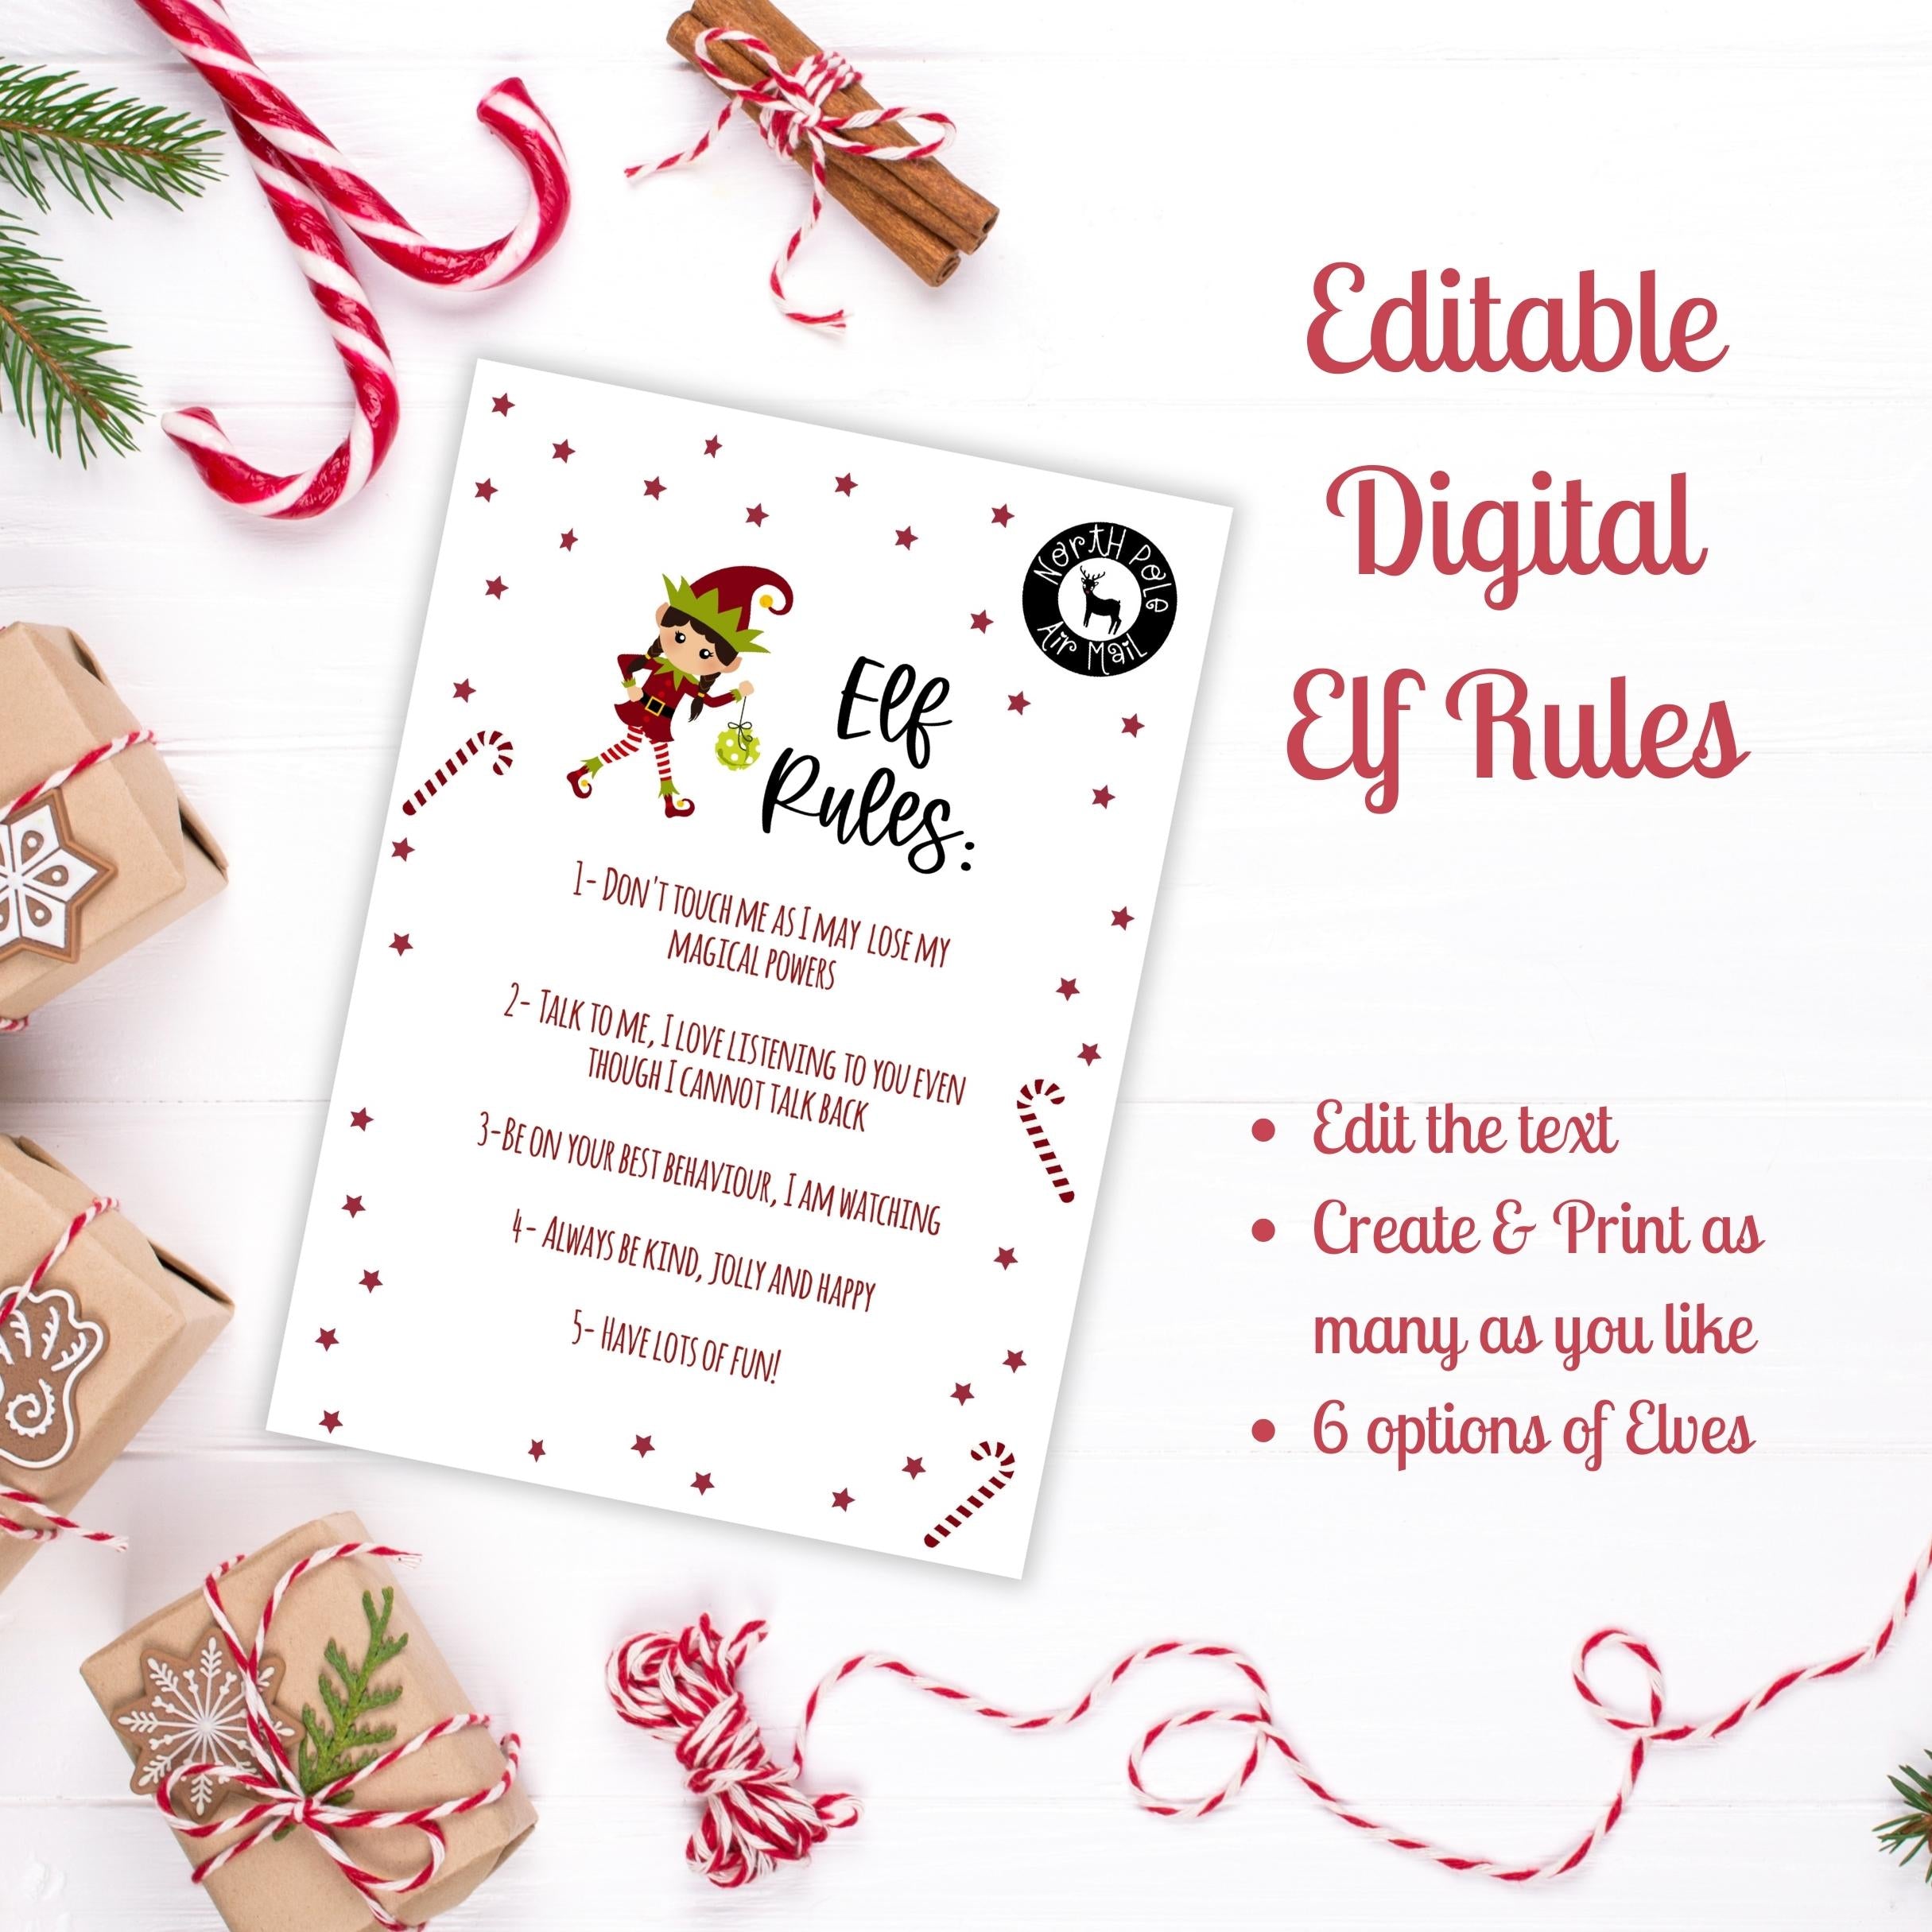 Editable Elf Rules - Digital Download for Elf on the Shelf Fun!